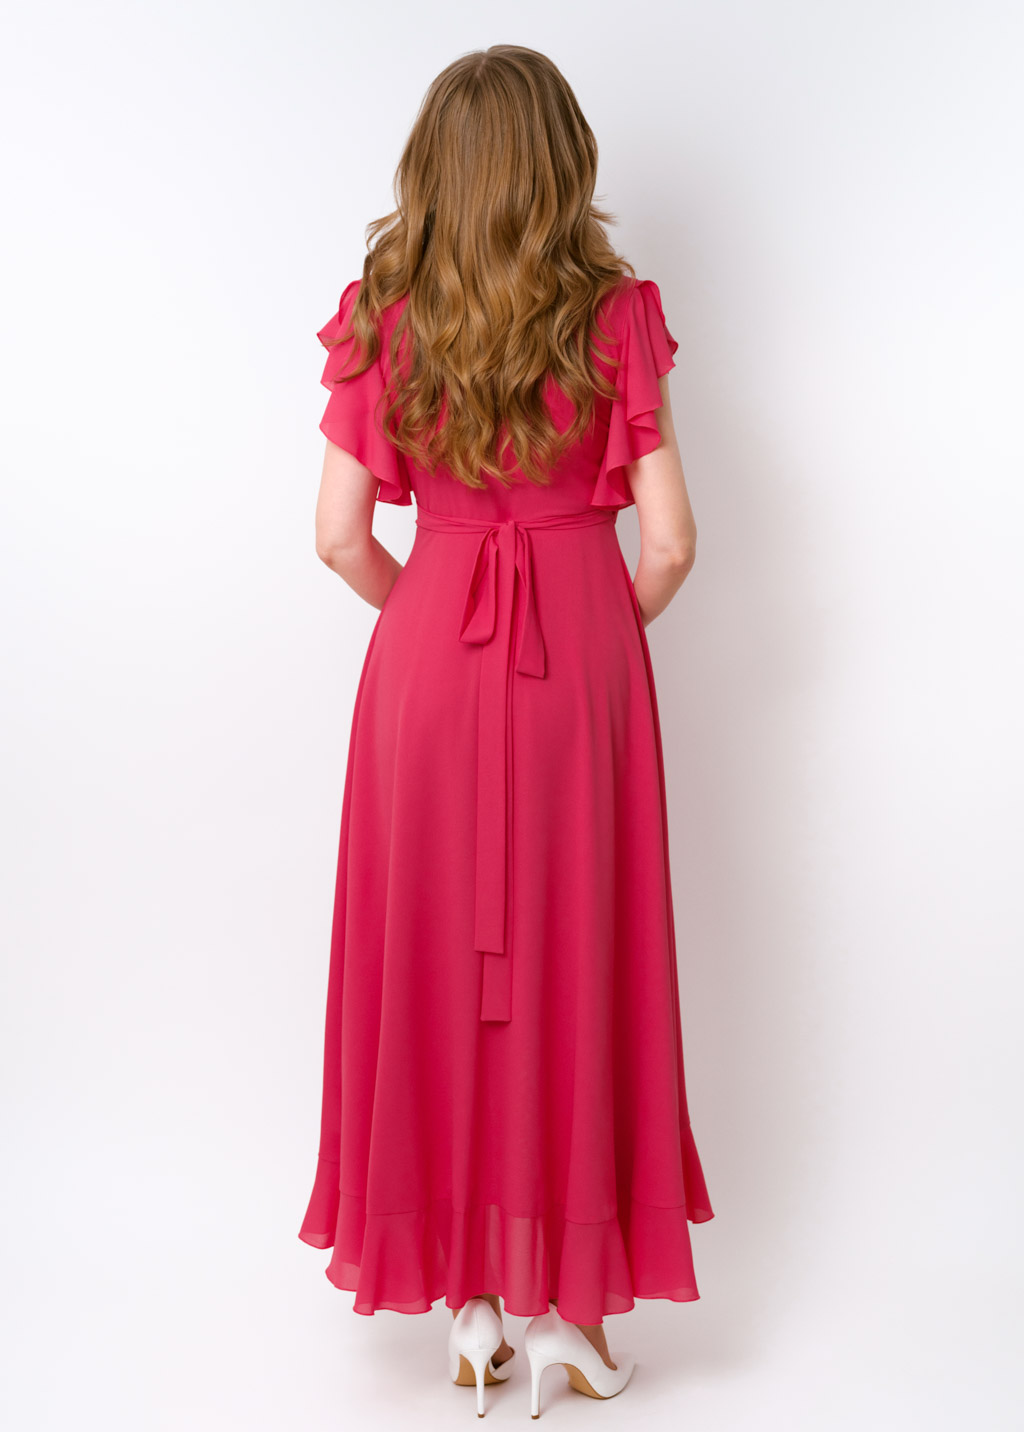 Coral pink chiffon wrap dress